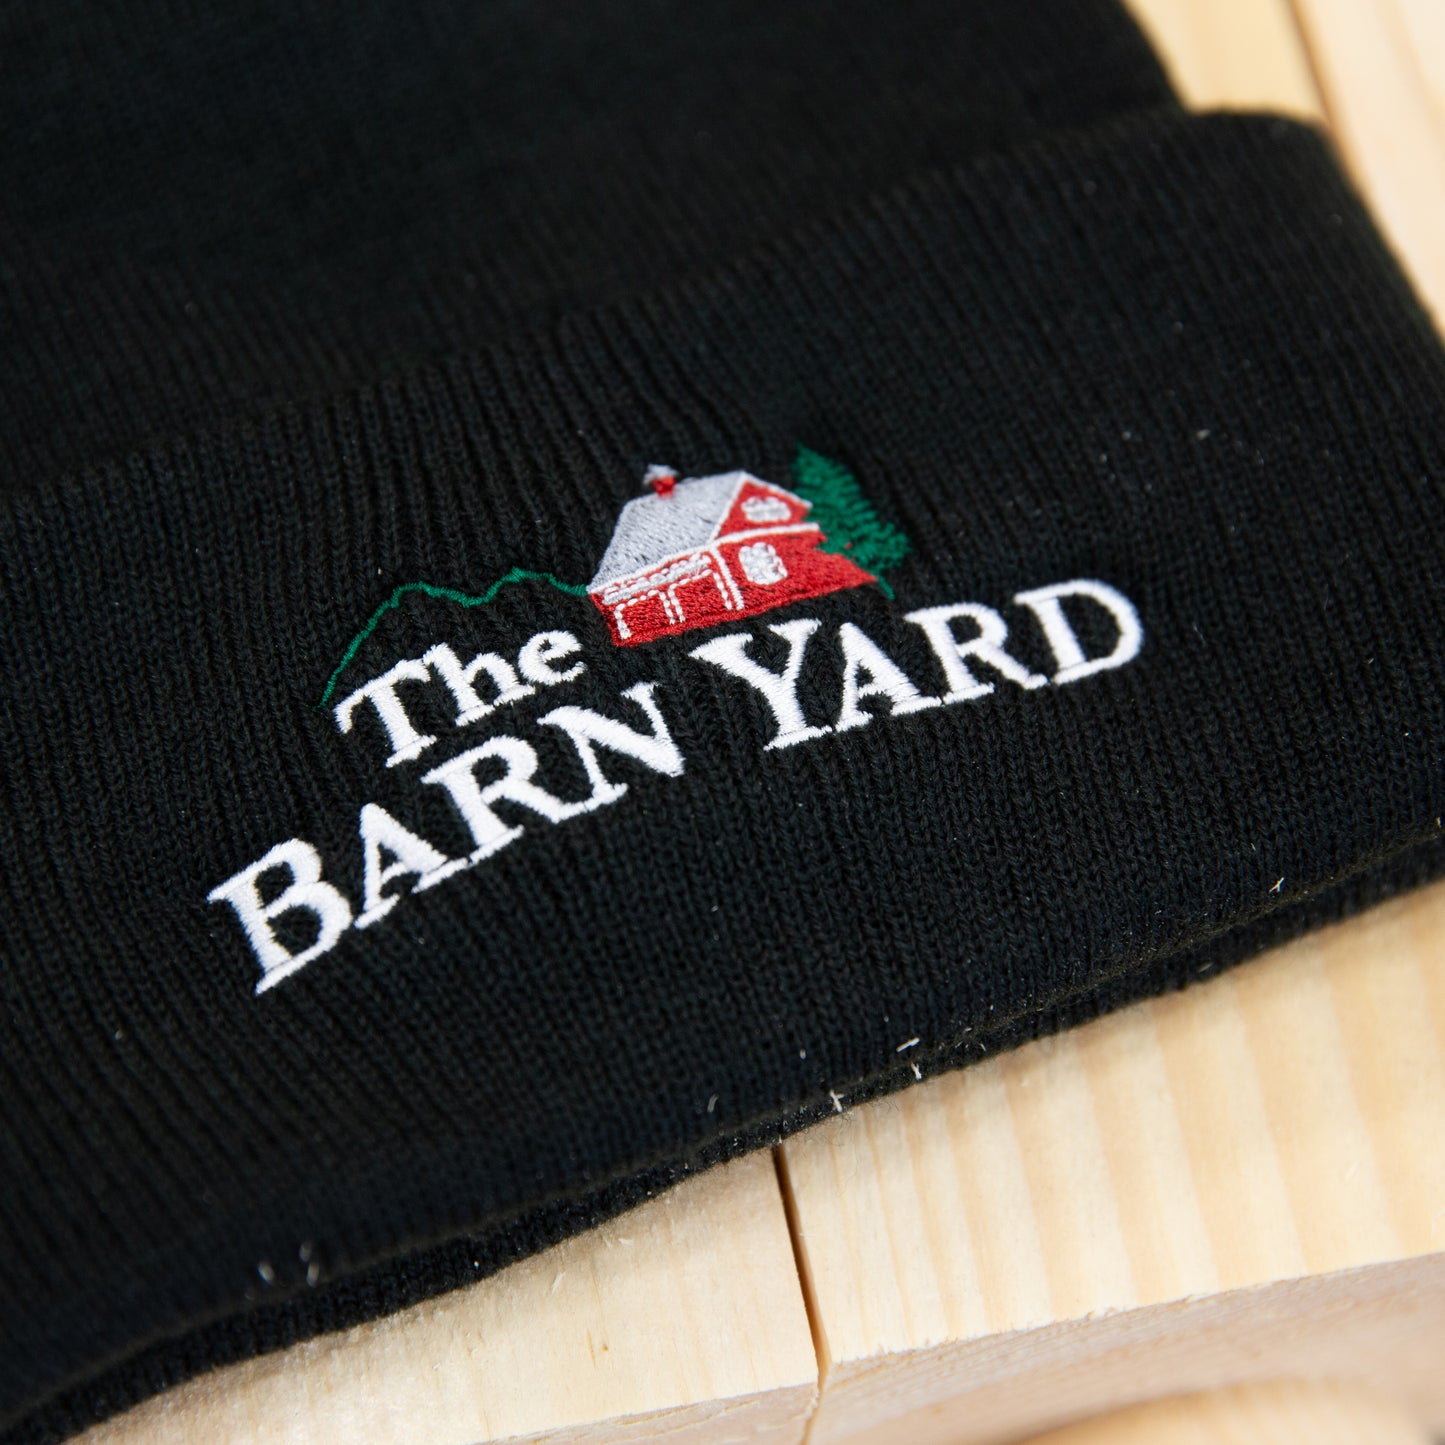 The Barn Yard Knit Beanie